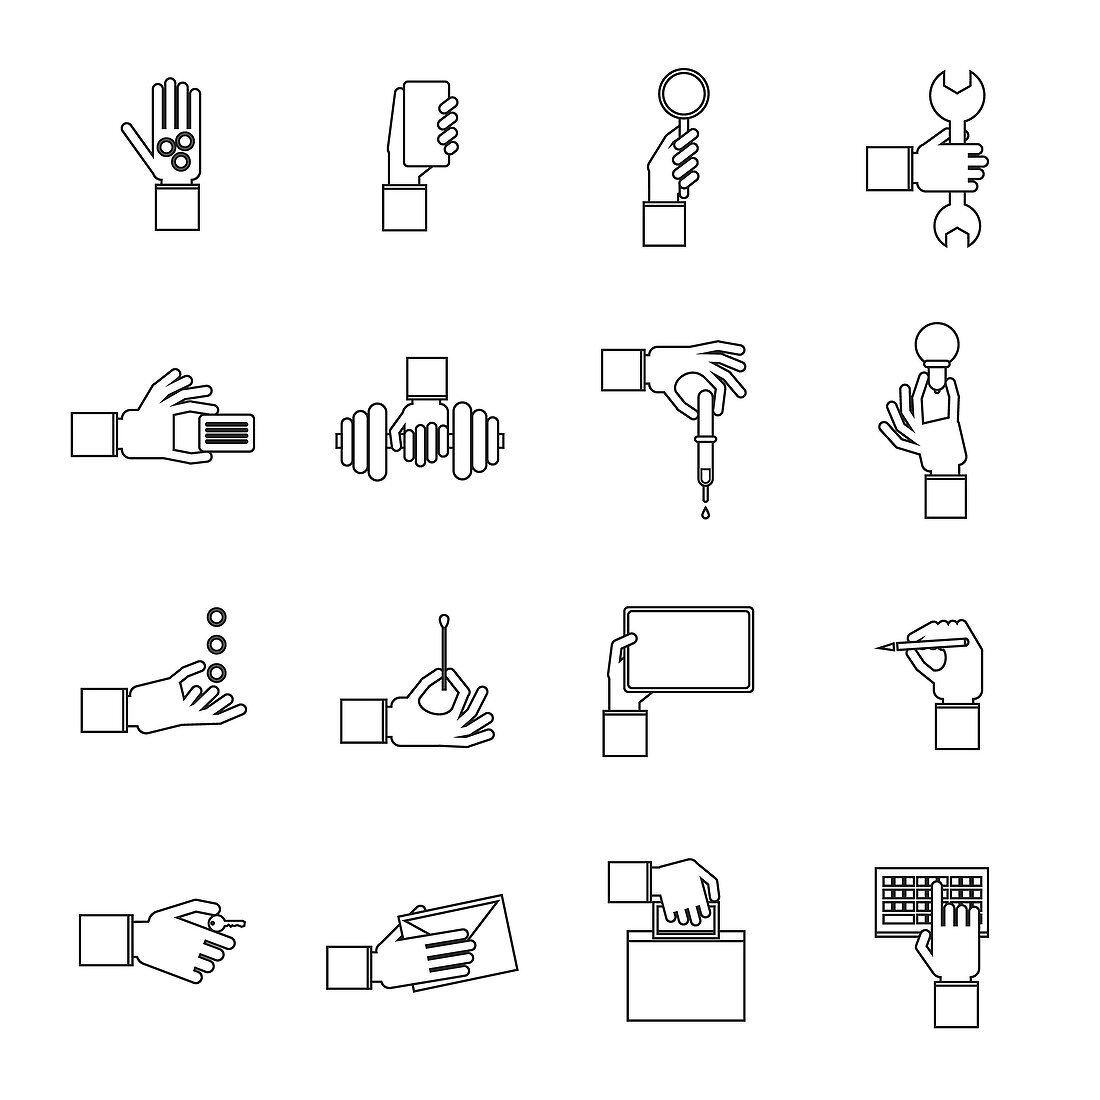 Everyday object icons, illustration